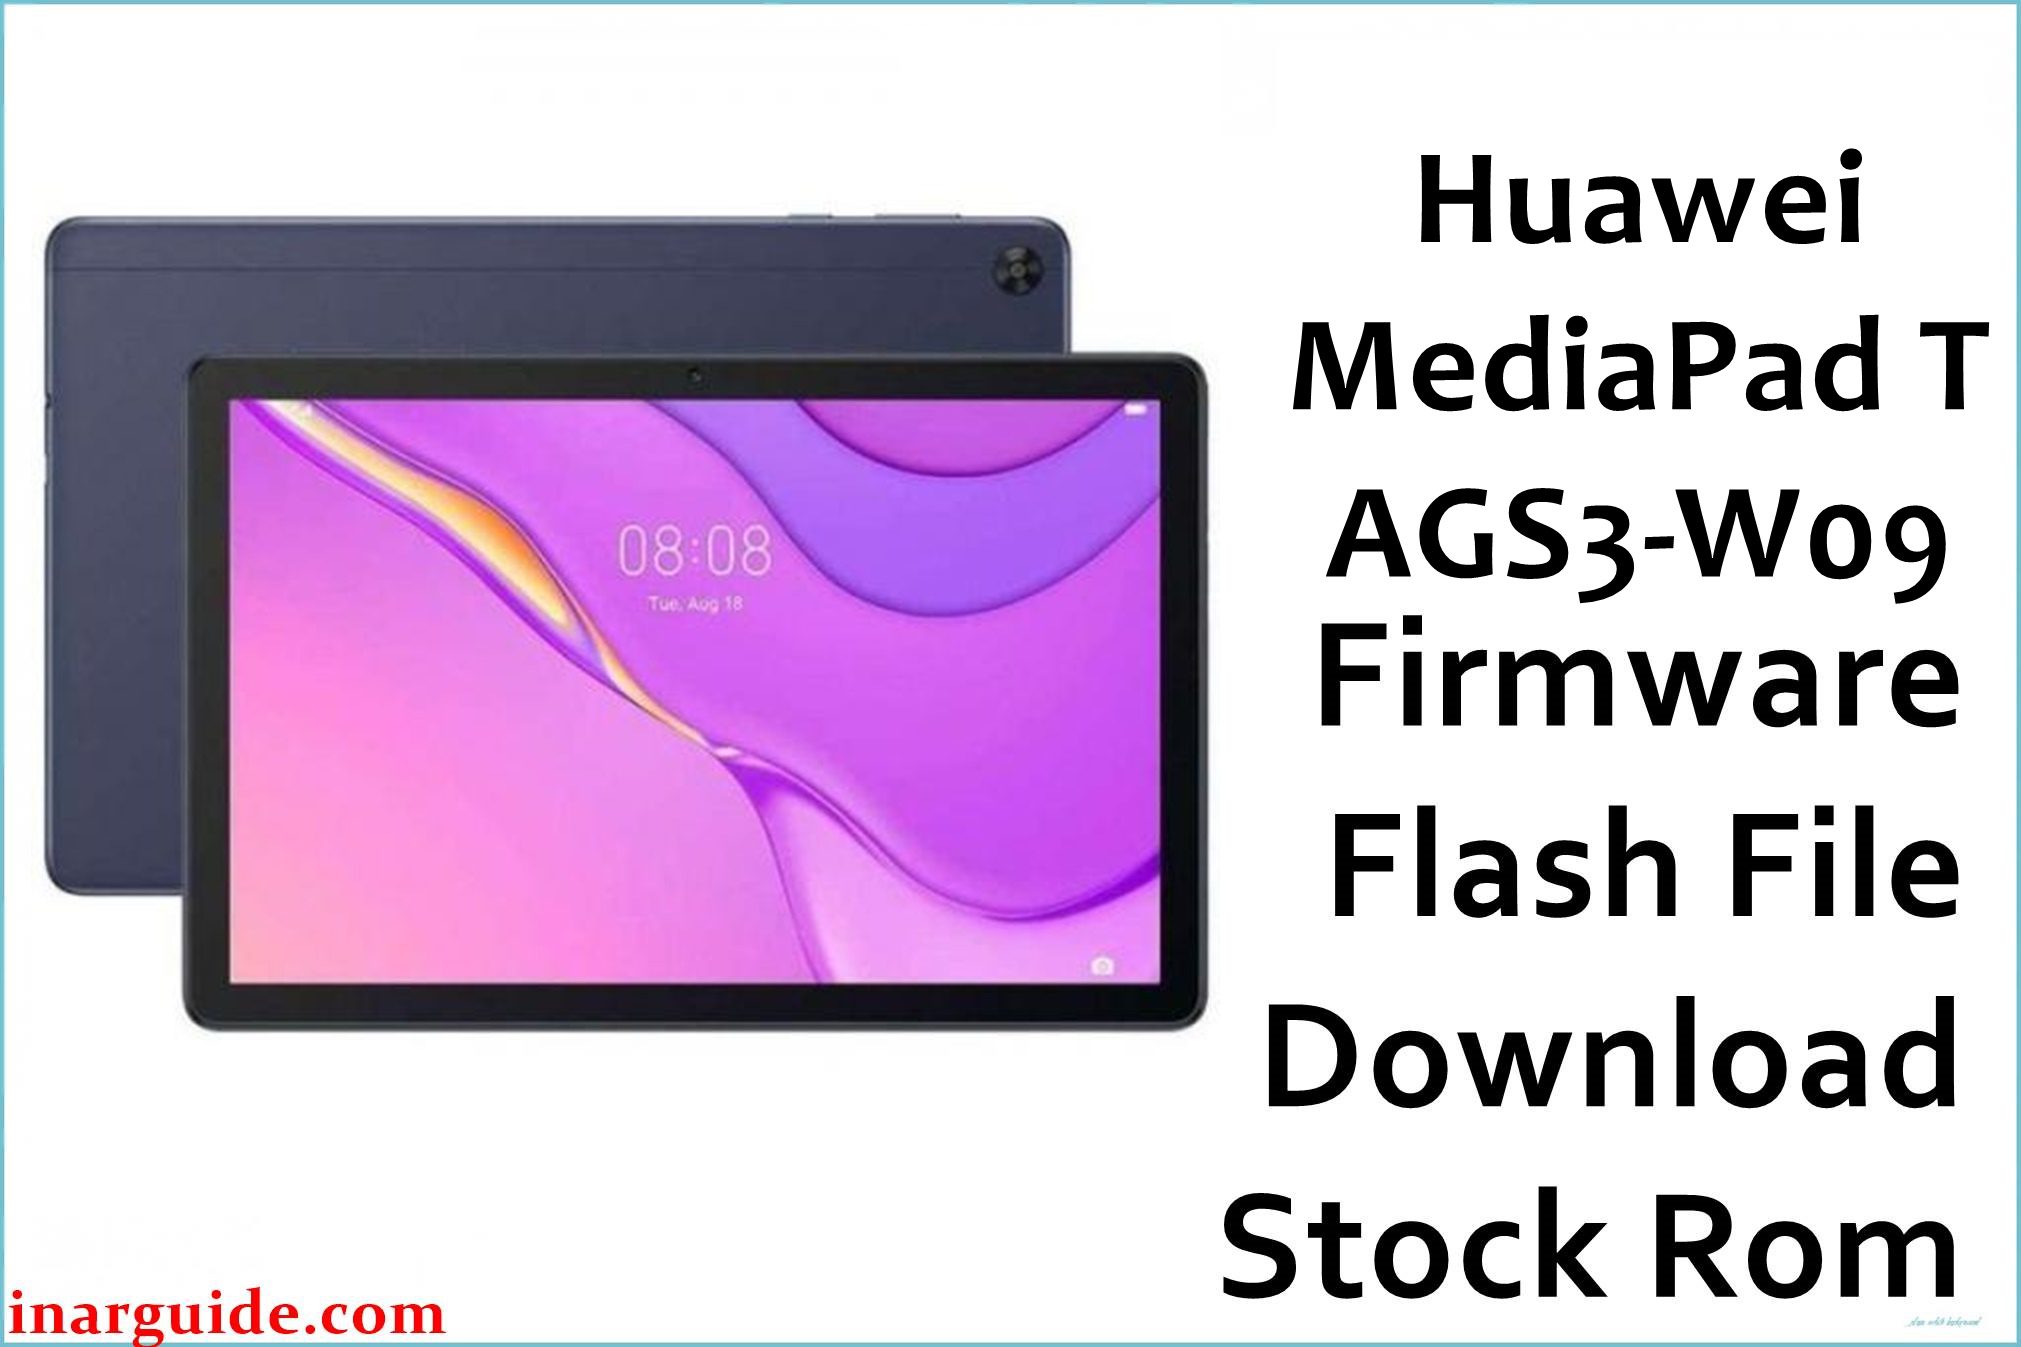 Huawei MediaPad T AGS3 W09